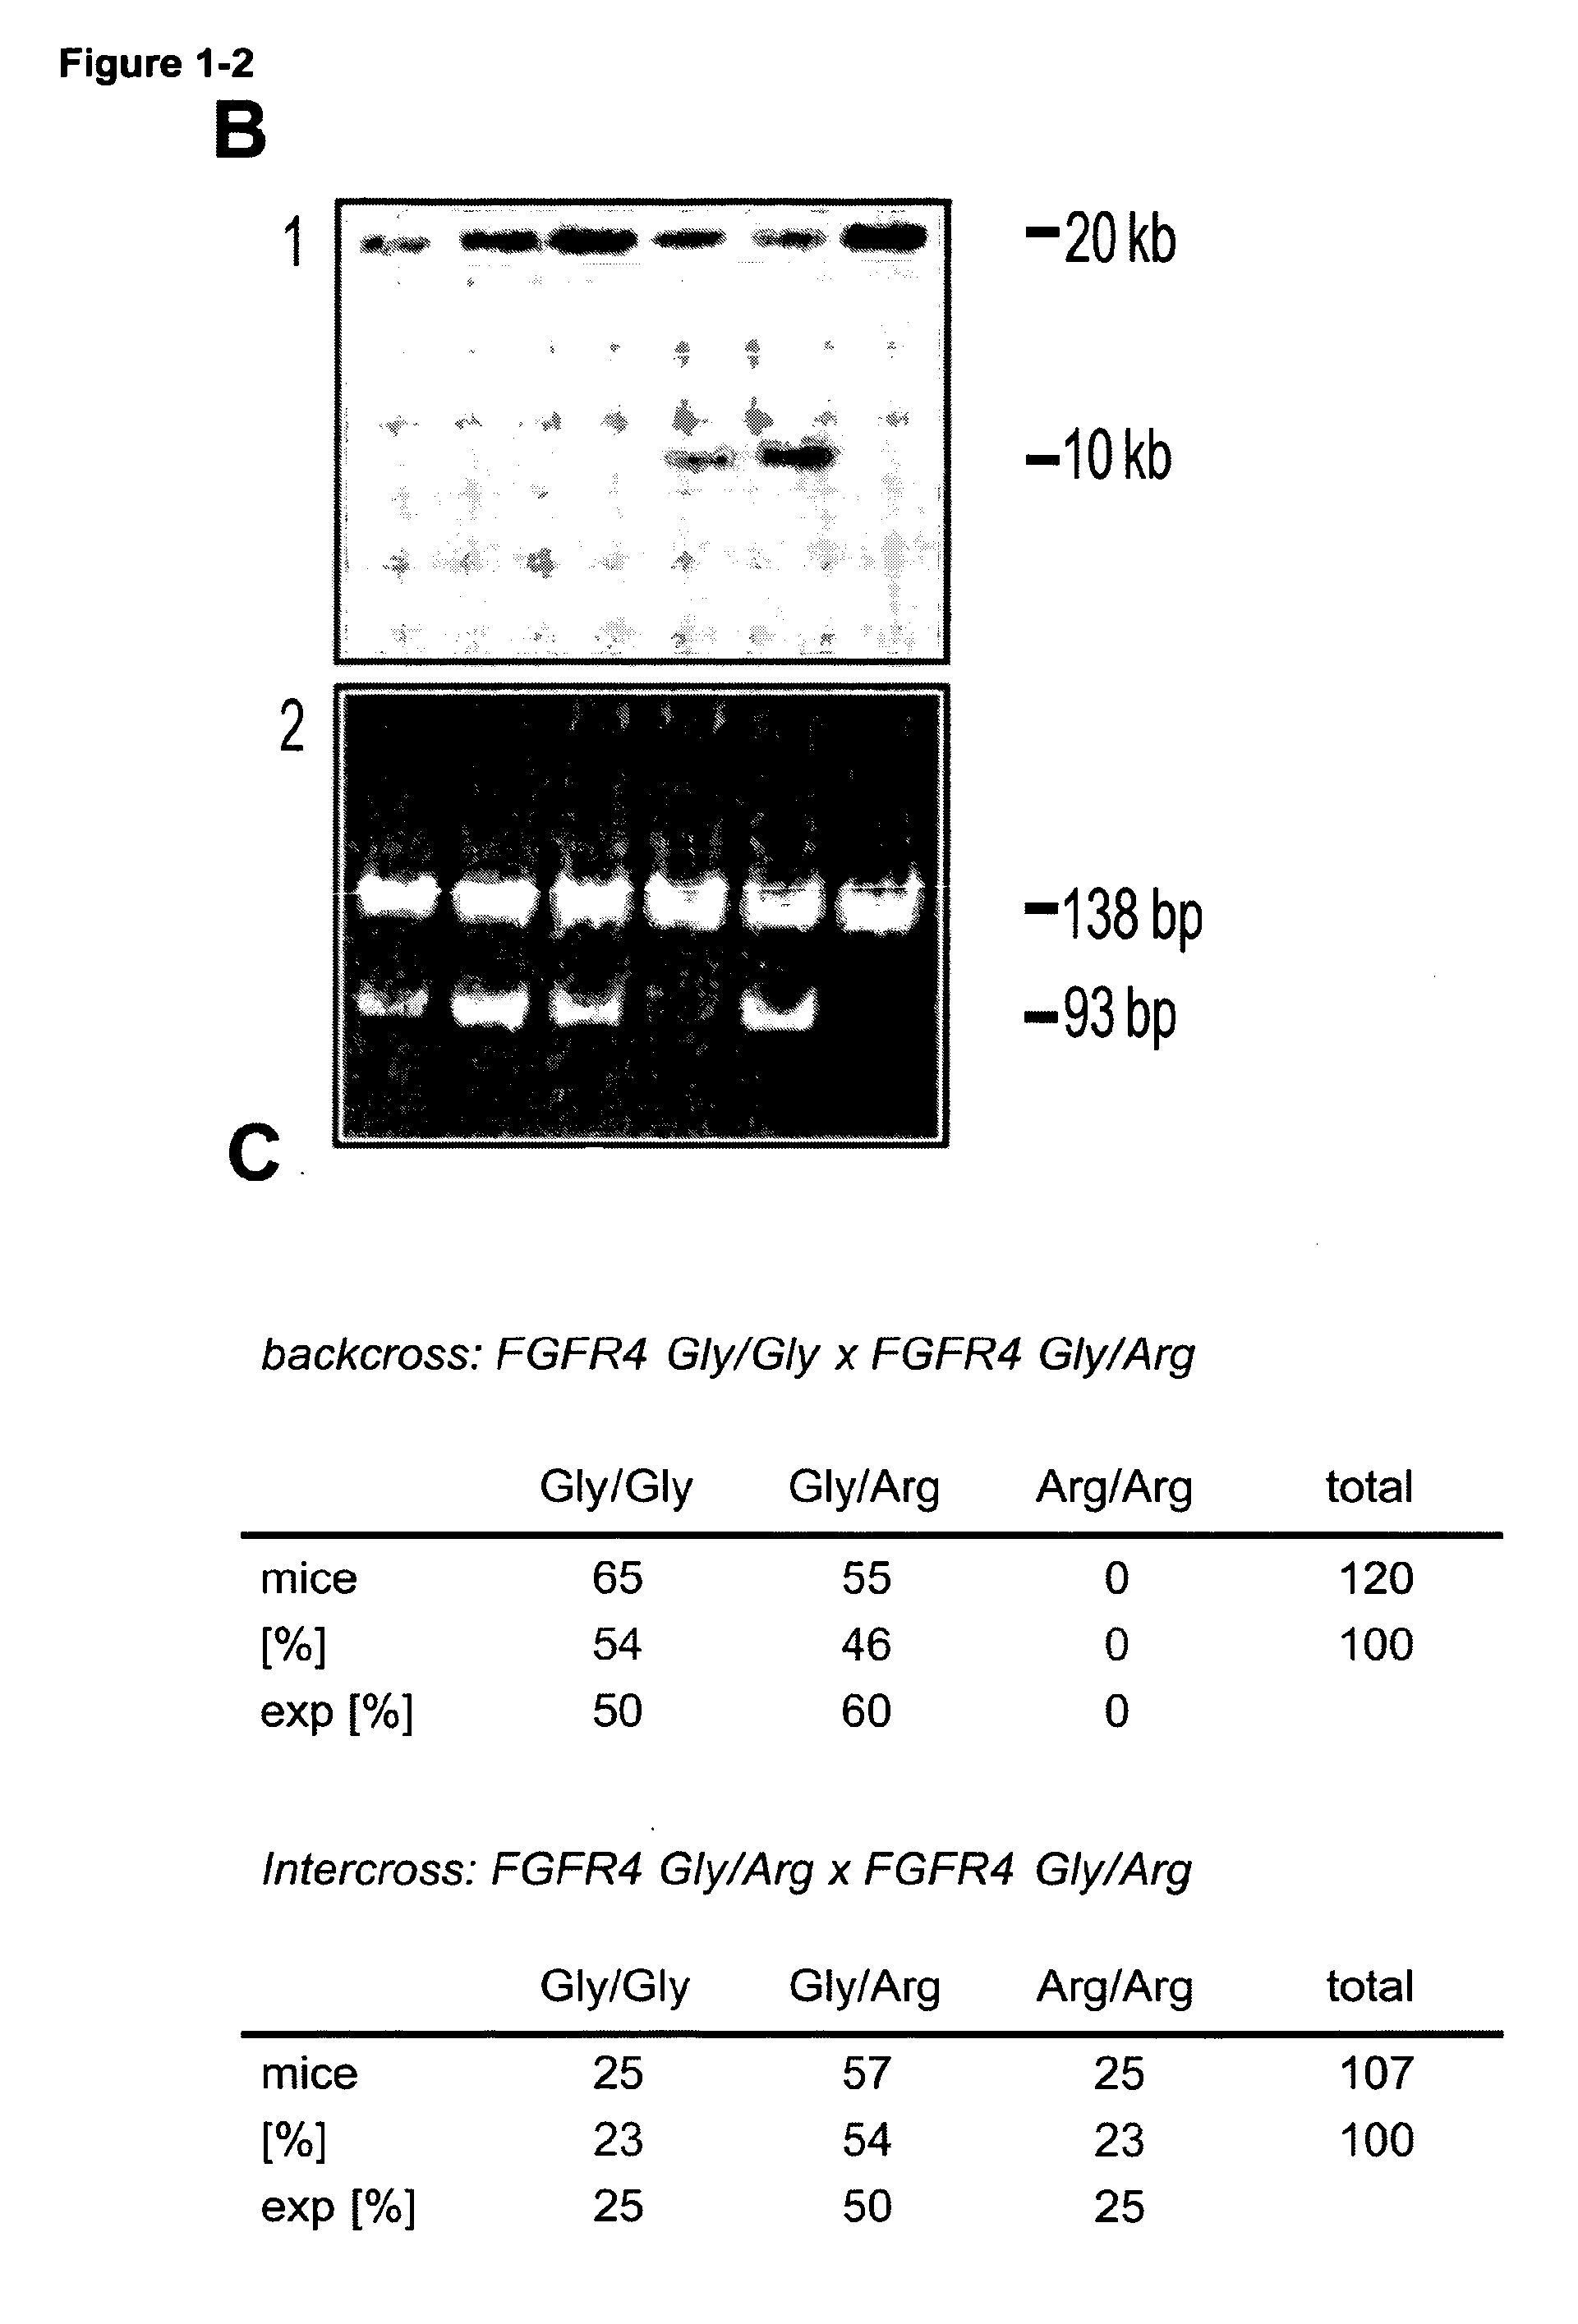 Rodent cancer model for human fgfr4 arg388 polymorphism